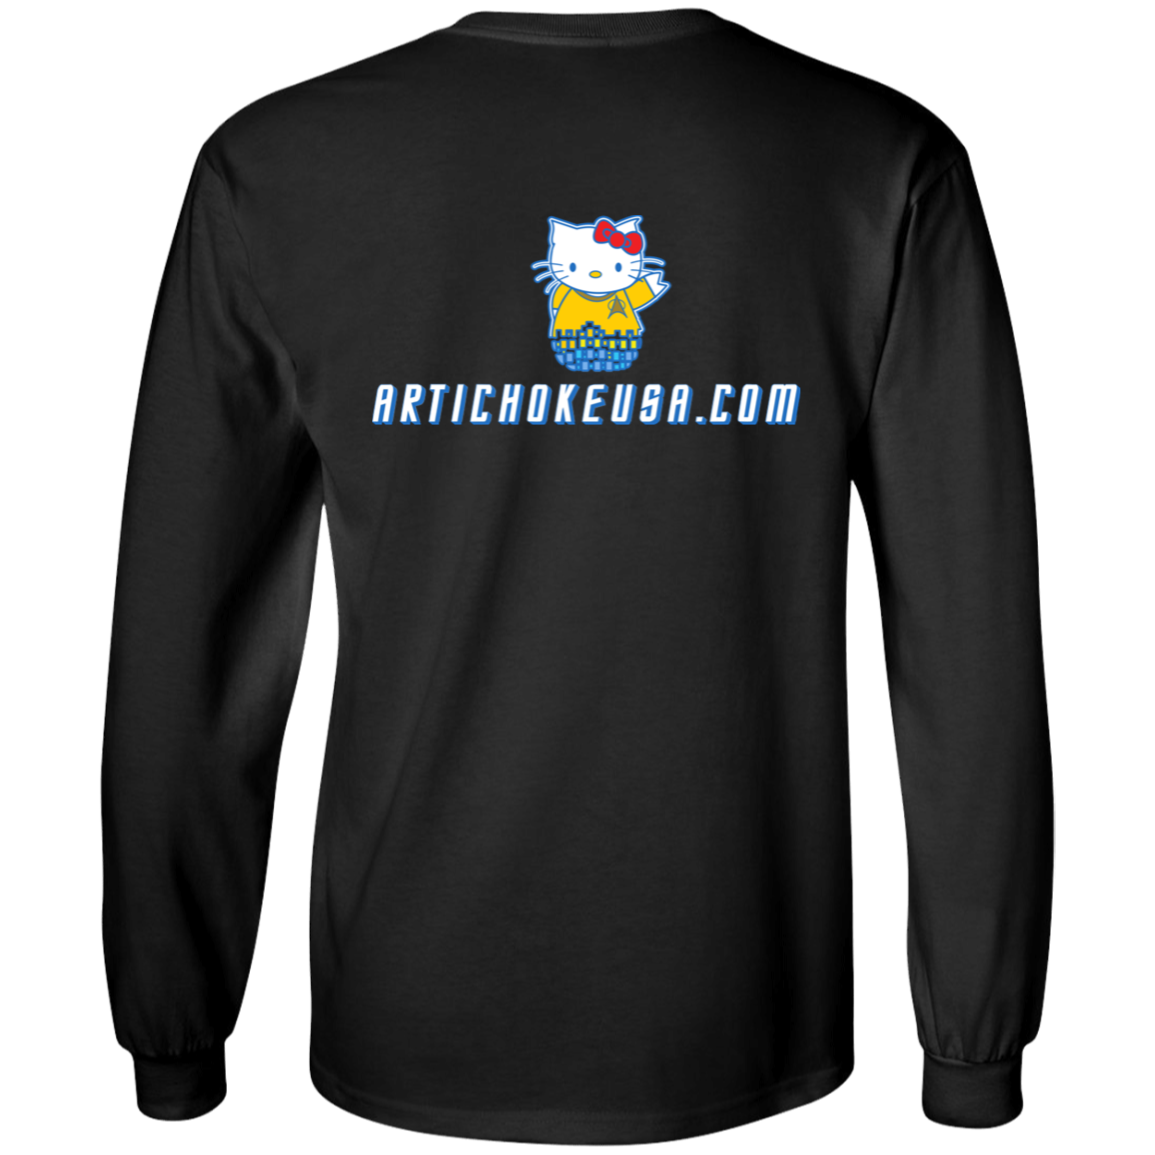 ArtichokeUSA Custom Design. Beam Me Up Kitty. Fan Art / Parody. Youth LS T-Shirt